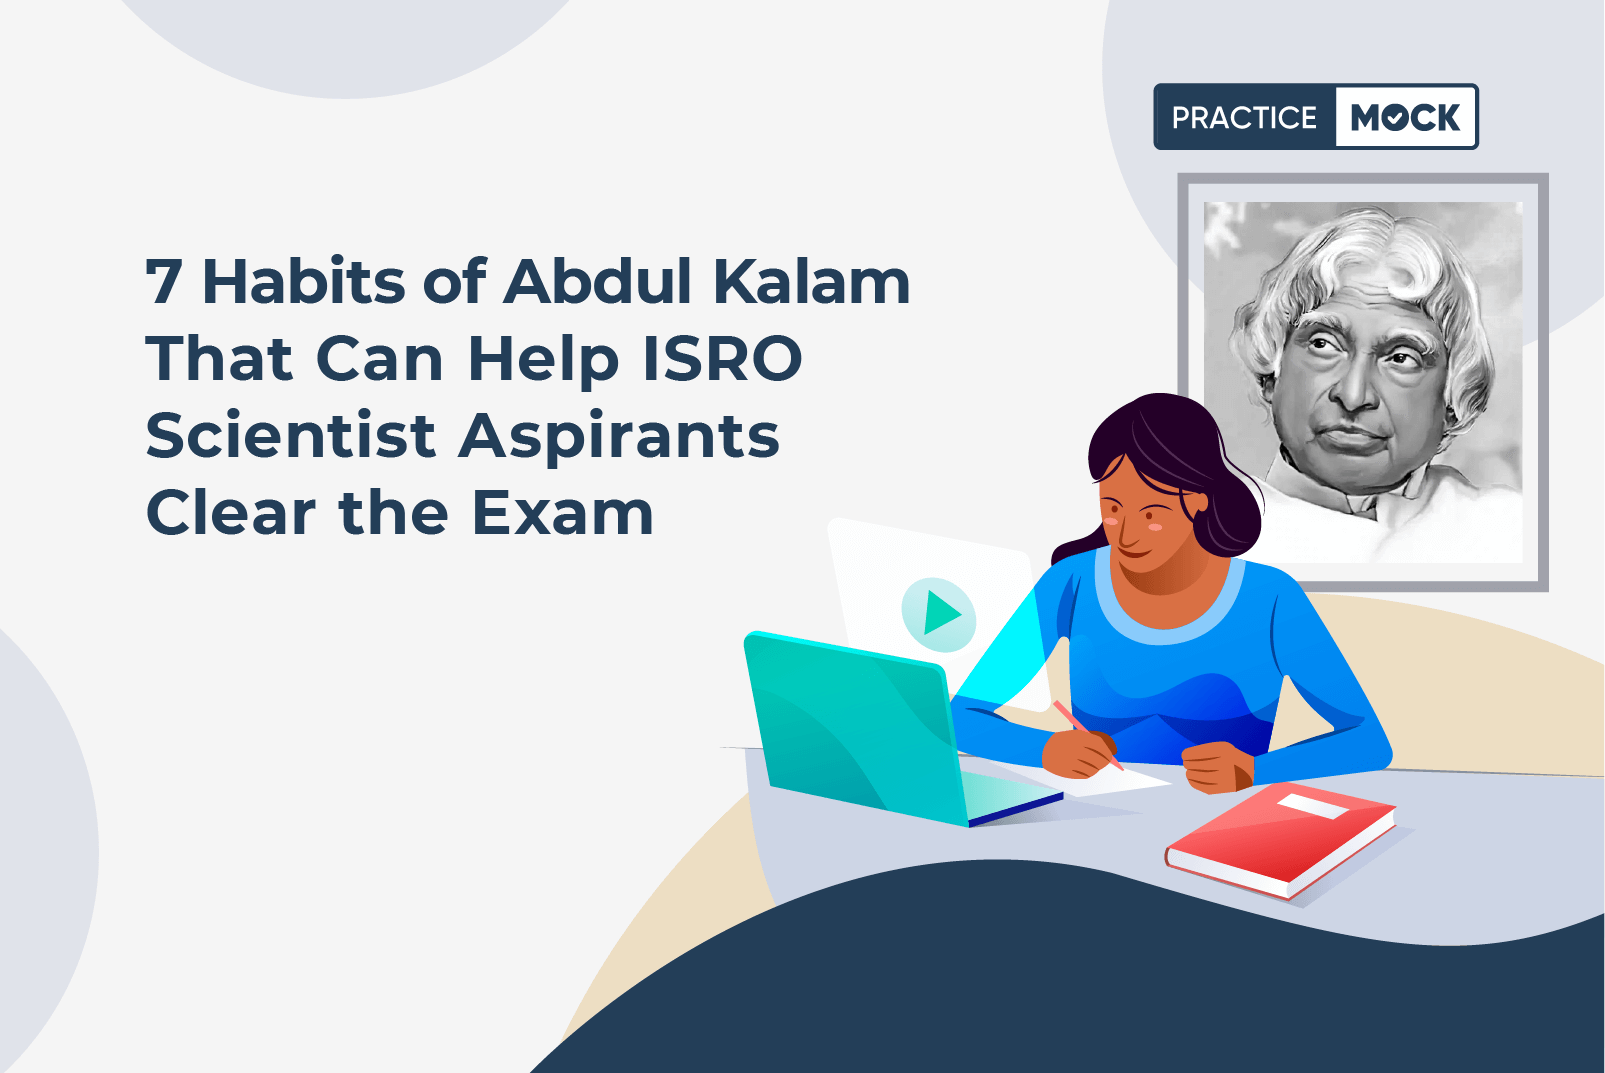 7 Habits of Abdul Kalam That Can Help ISRO Scientist Aspirants Clear the Exam